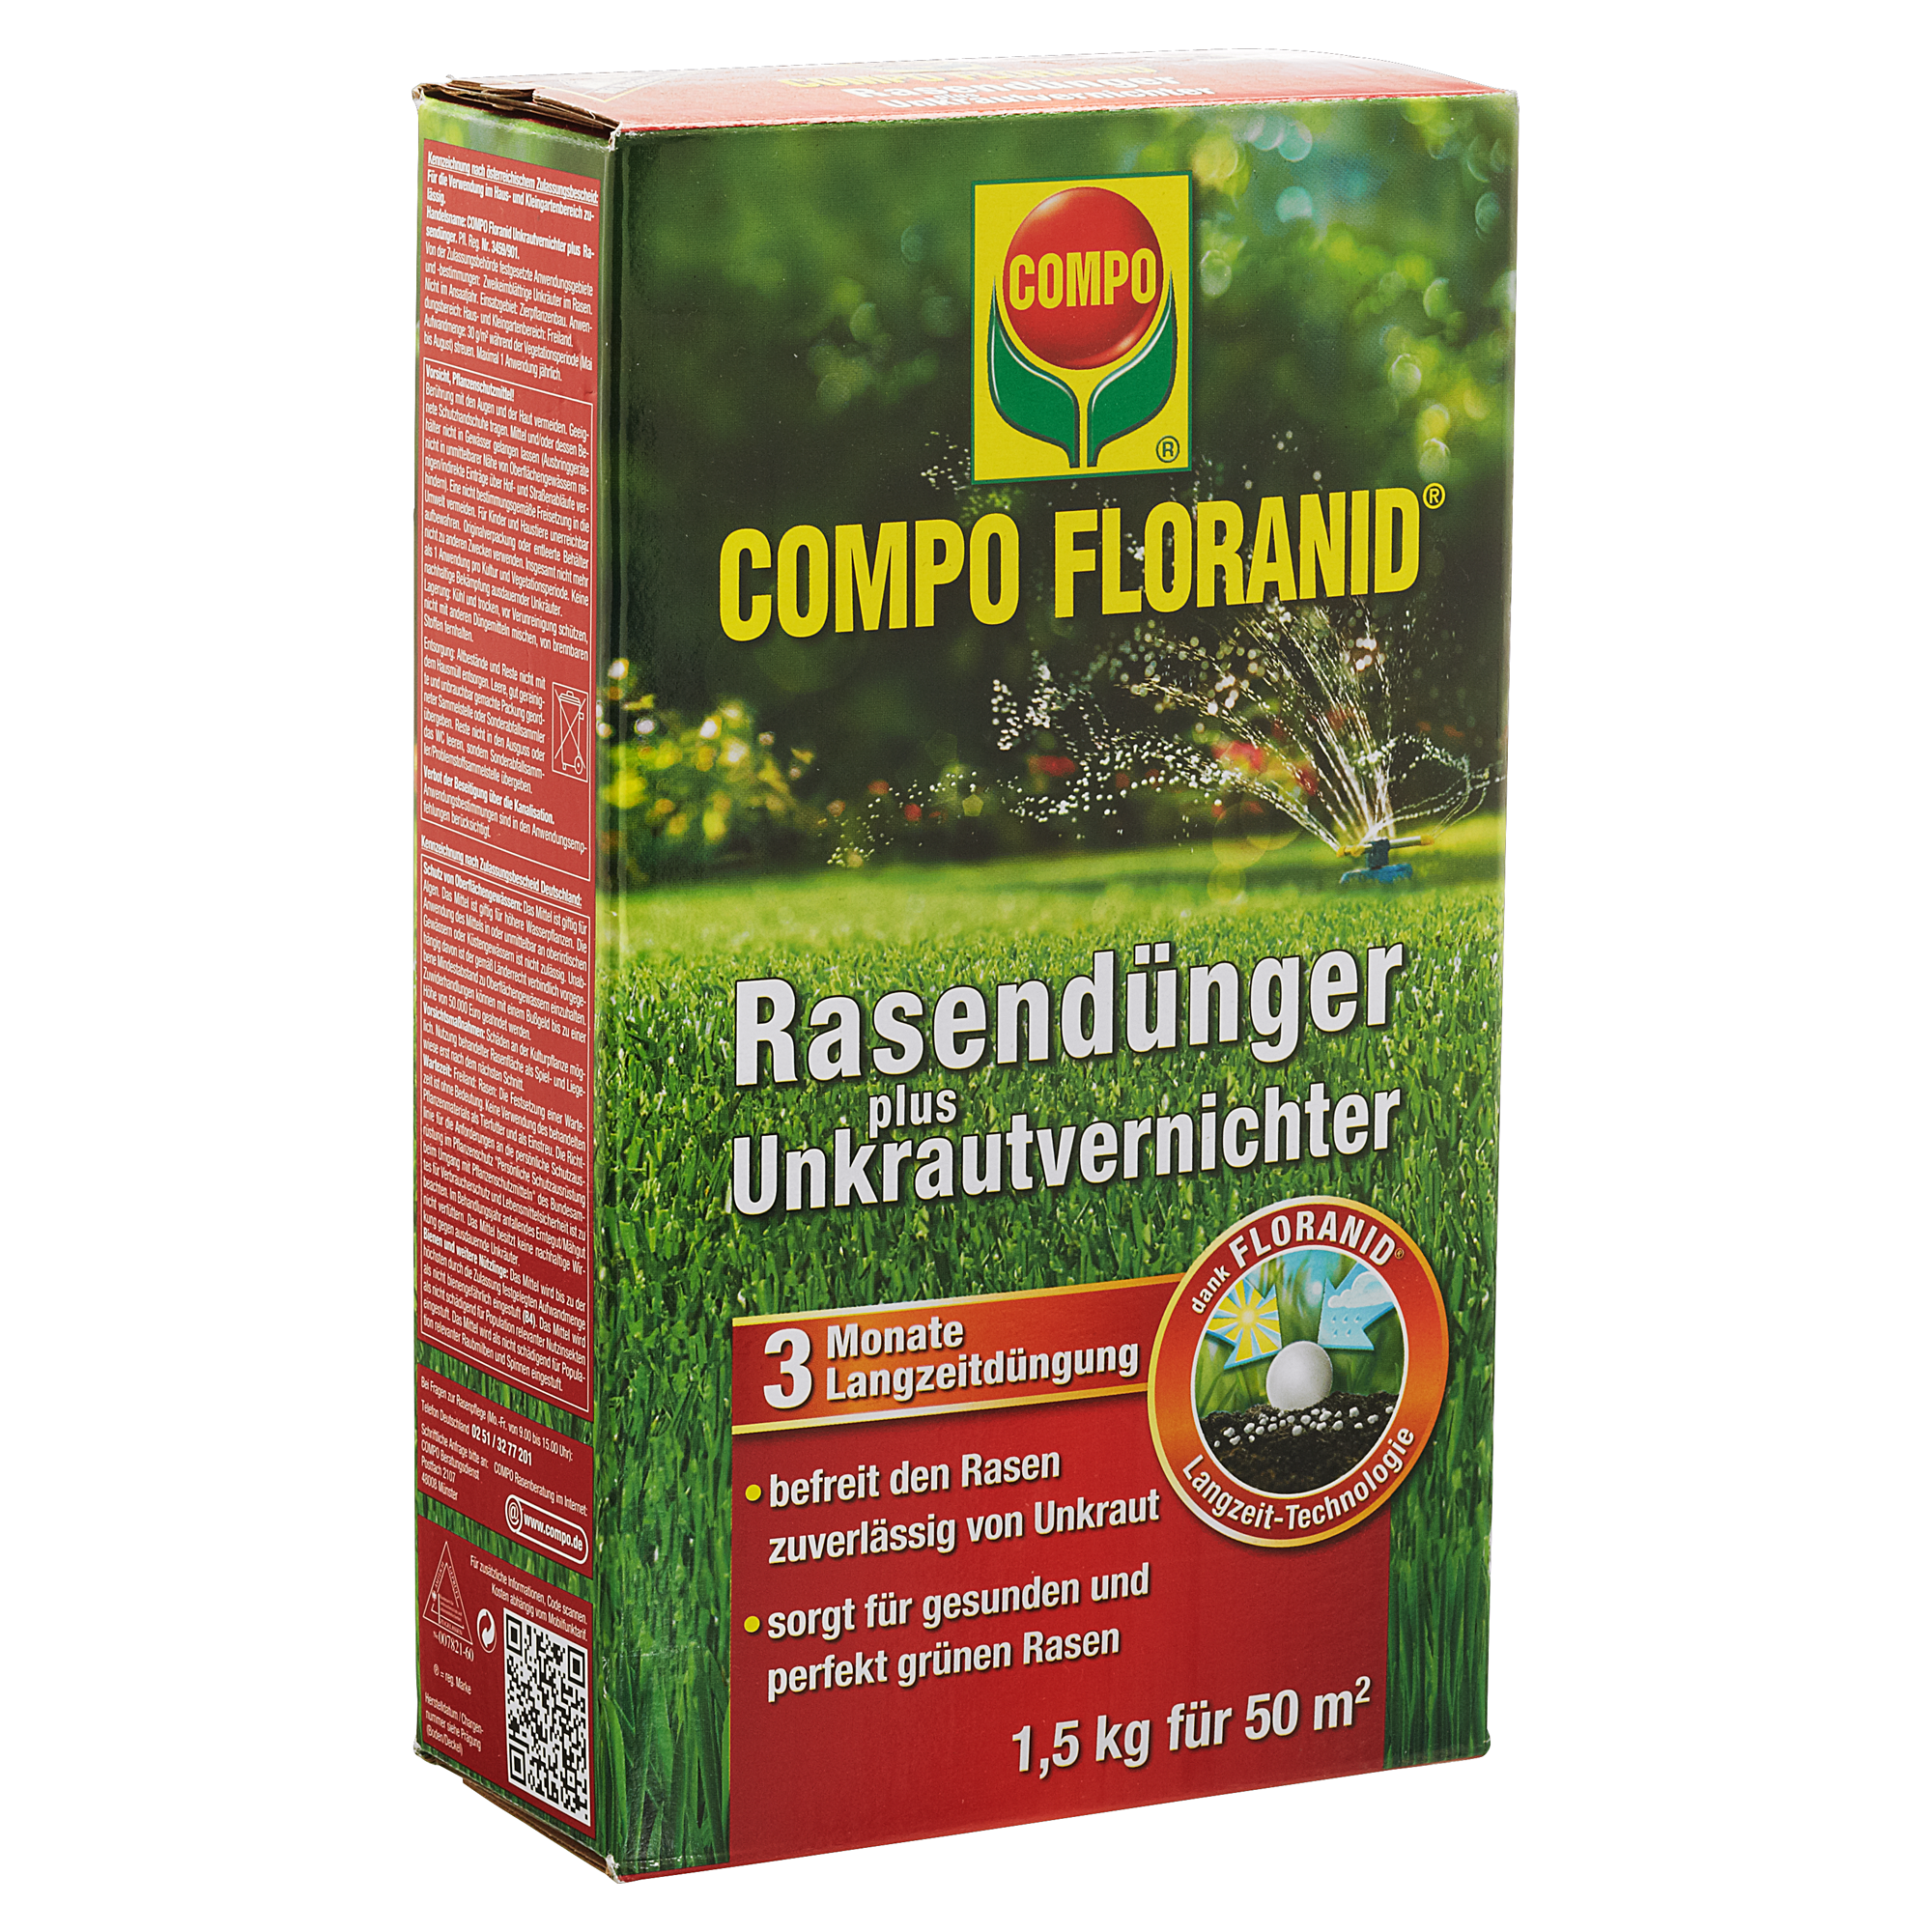 Compo Floranid Rasendünger plus Unkrautvernichter 1,5 kg ǀ toom Baumarkt